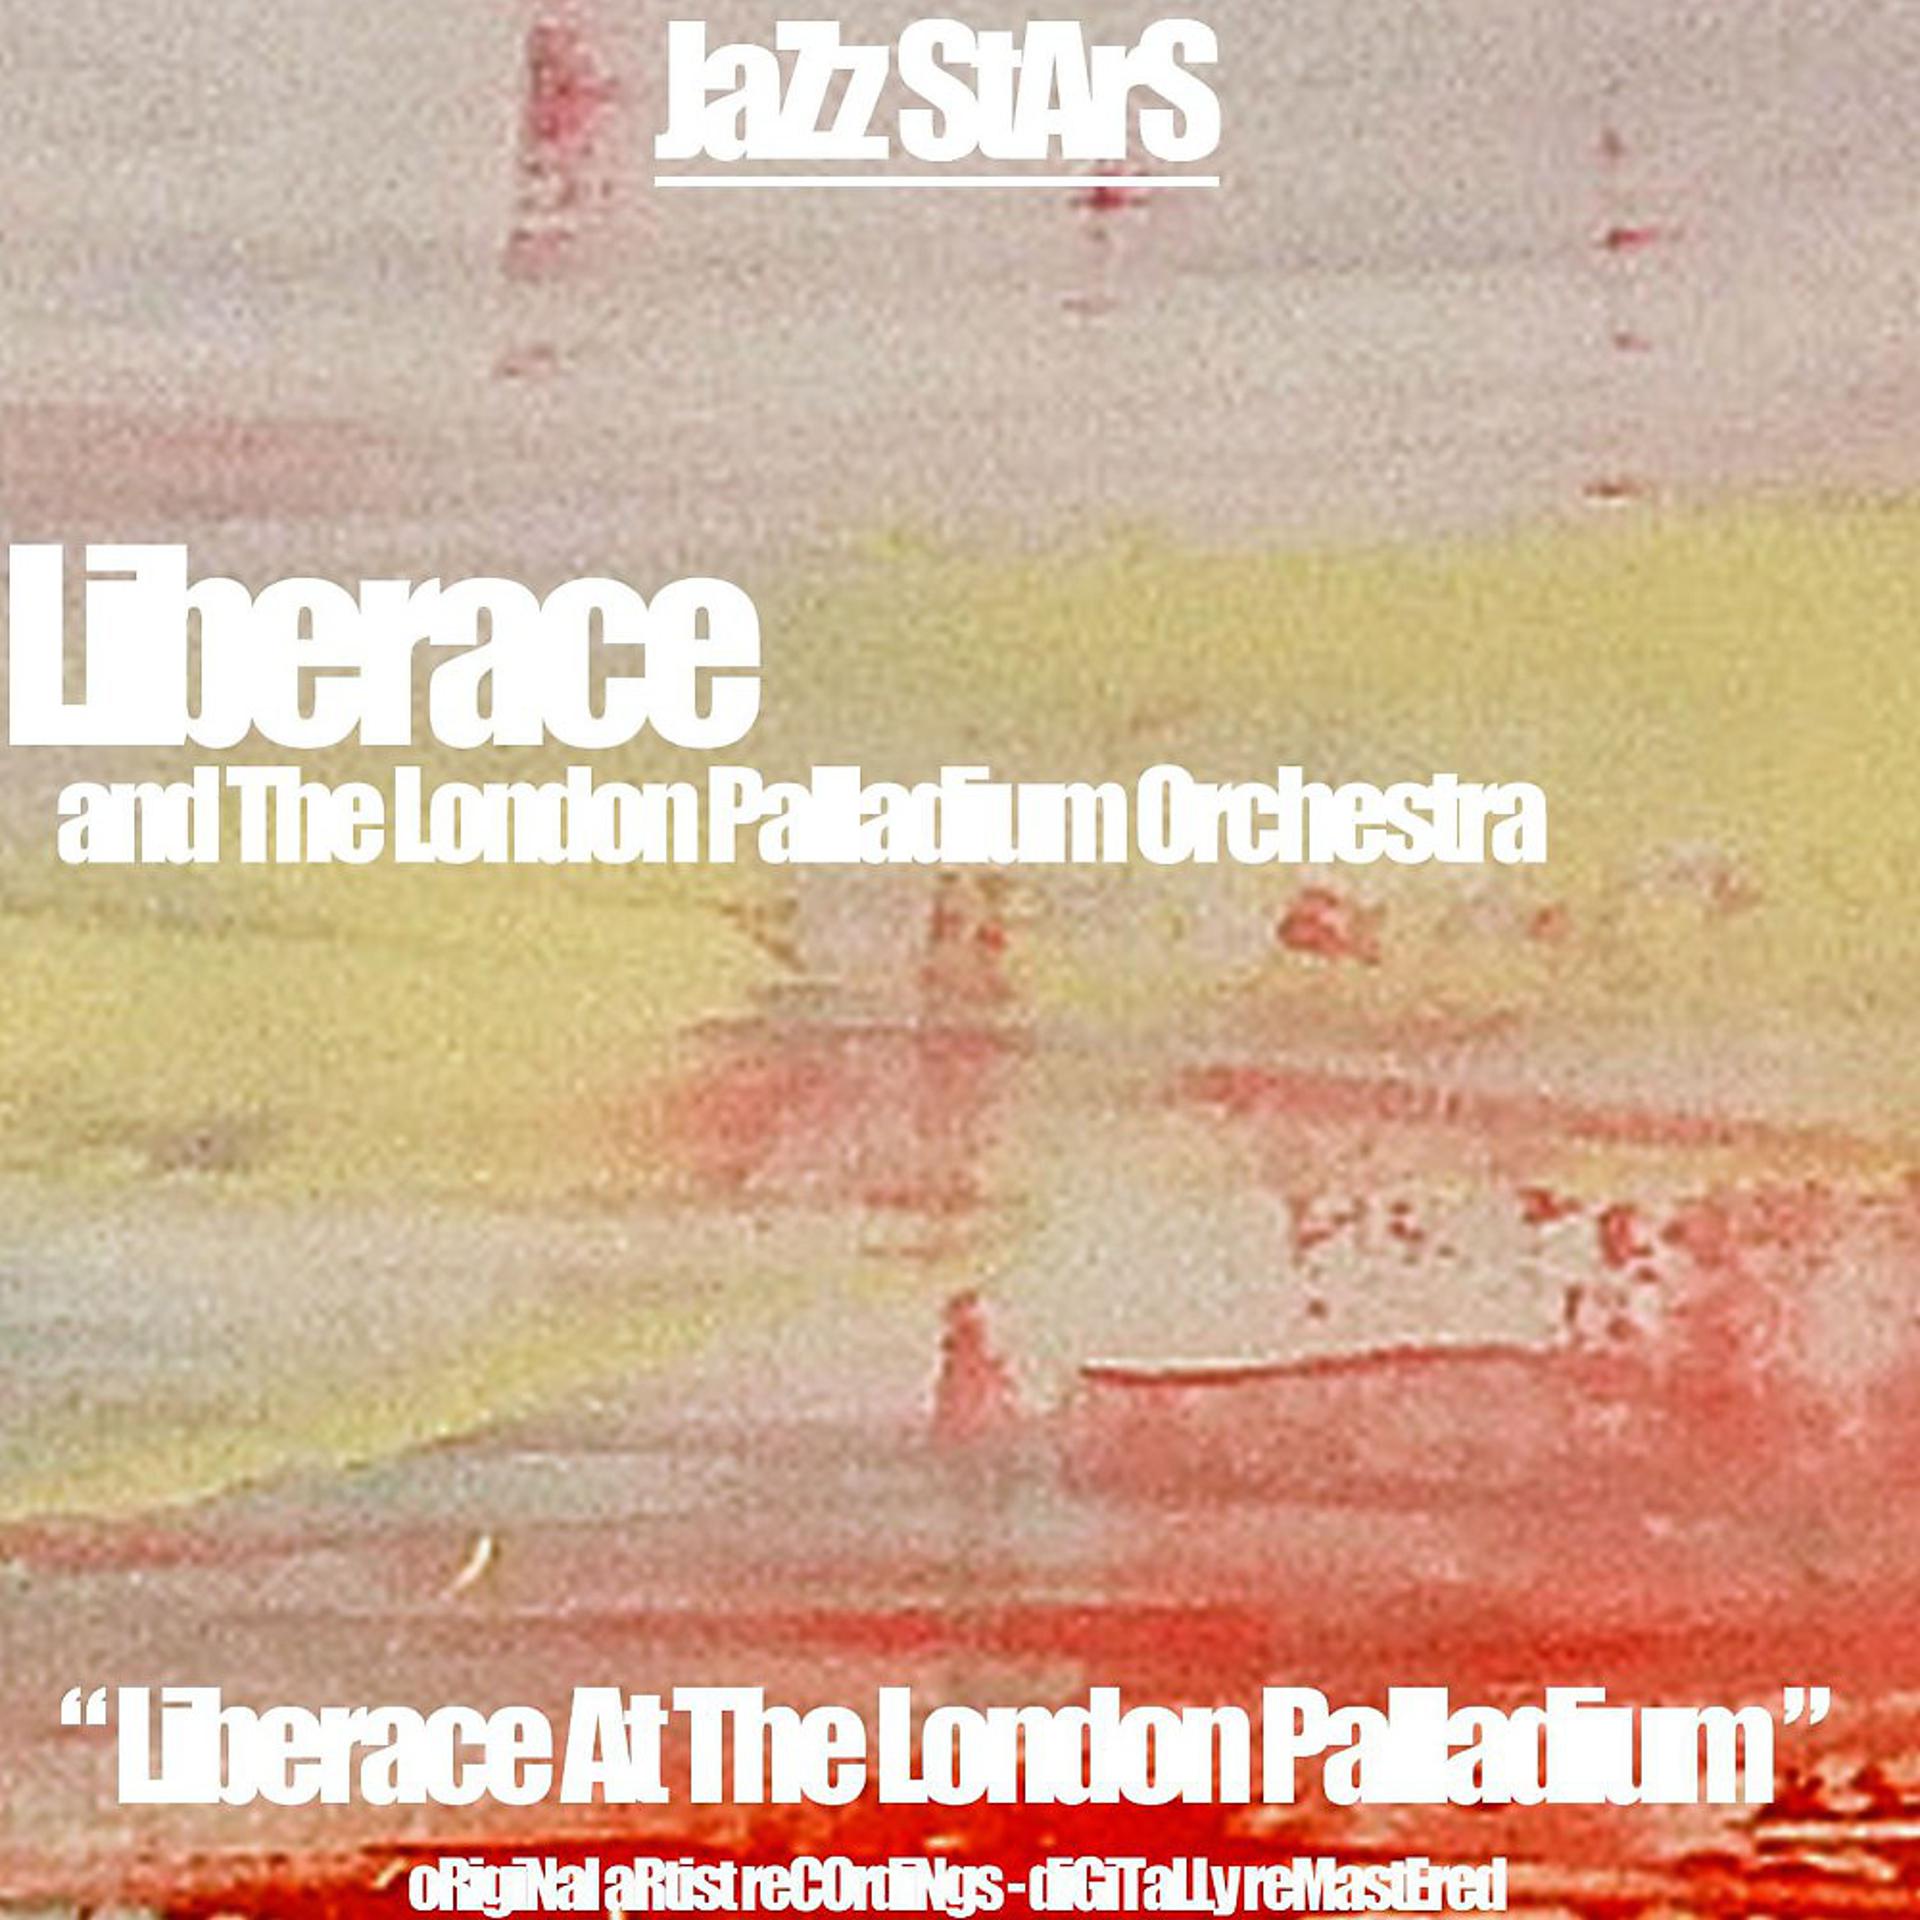 Постер альбома Liberace at the London Palladium (Original Album) [Live]